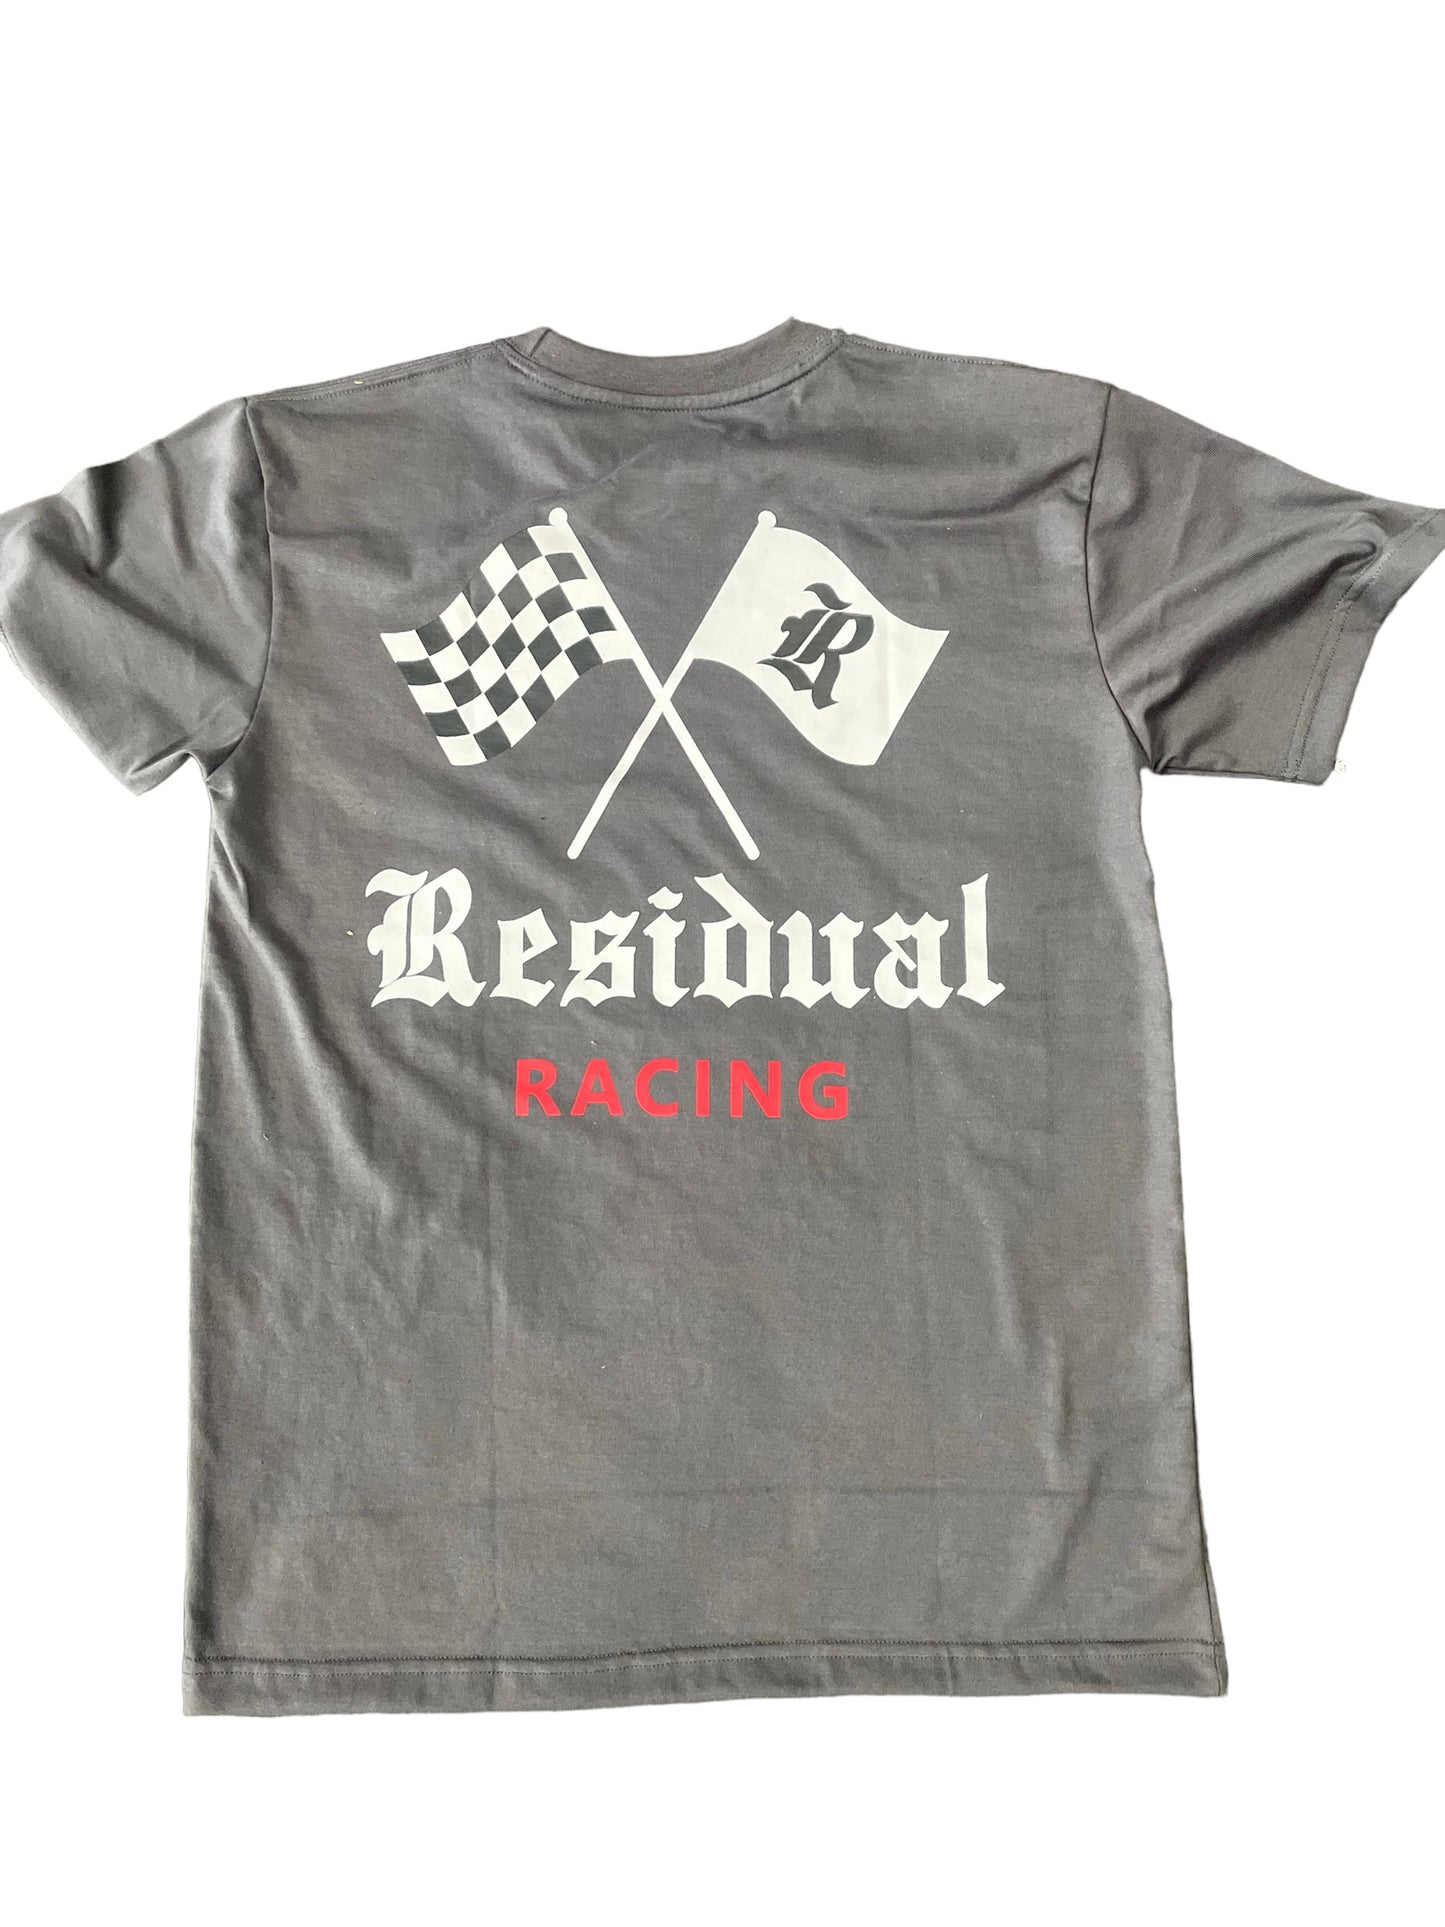 Residual racing tshirt